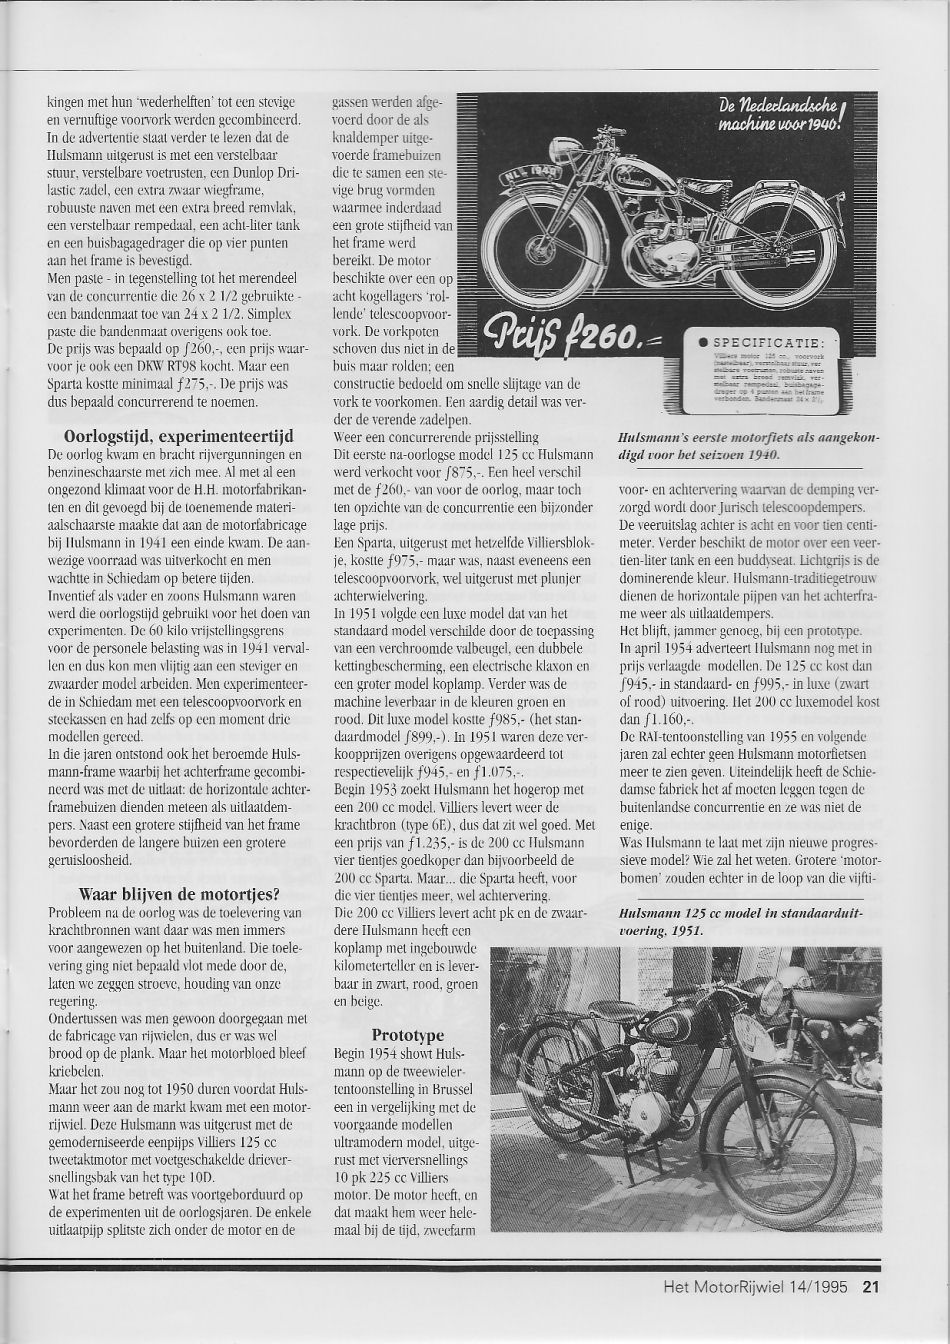 Over Hulsmann - Het Motorrijwiel nr. 14 1995